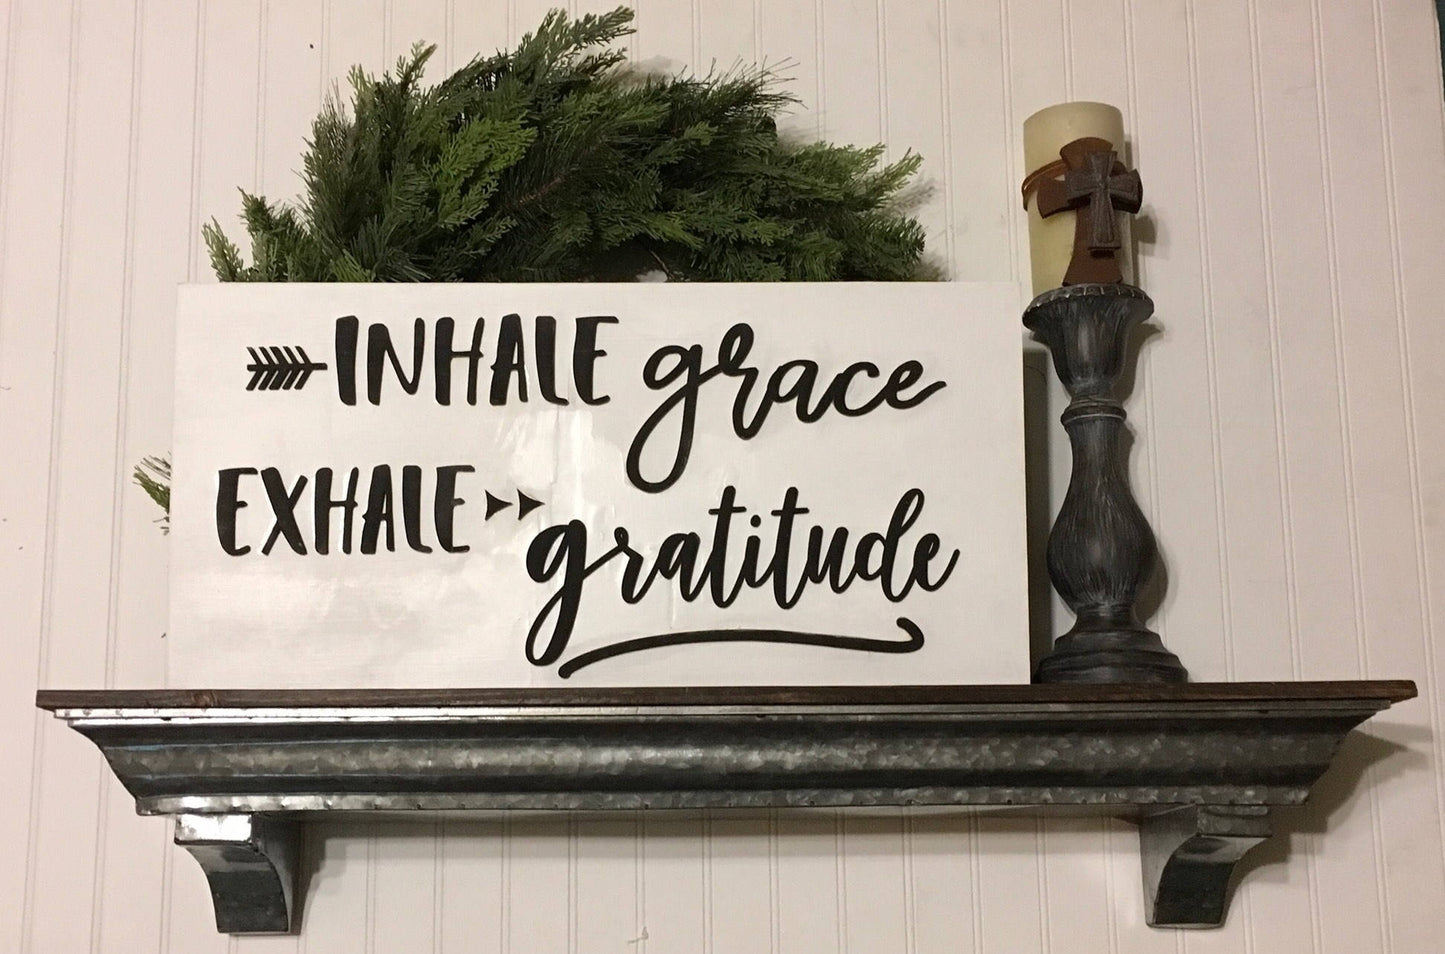 Grace, inhale grace wall sign, 3D wood signs, wood signs, 3D